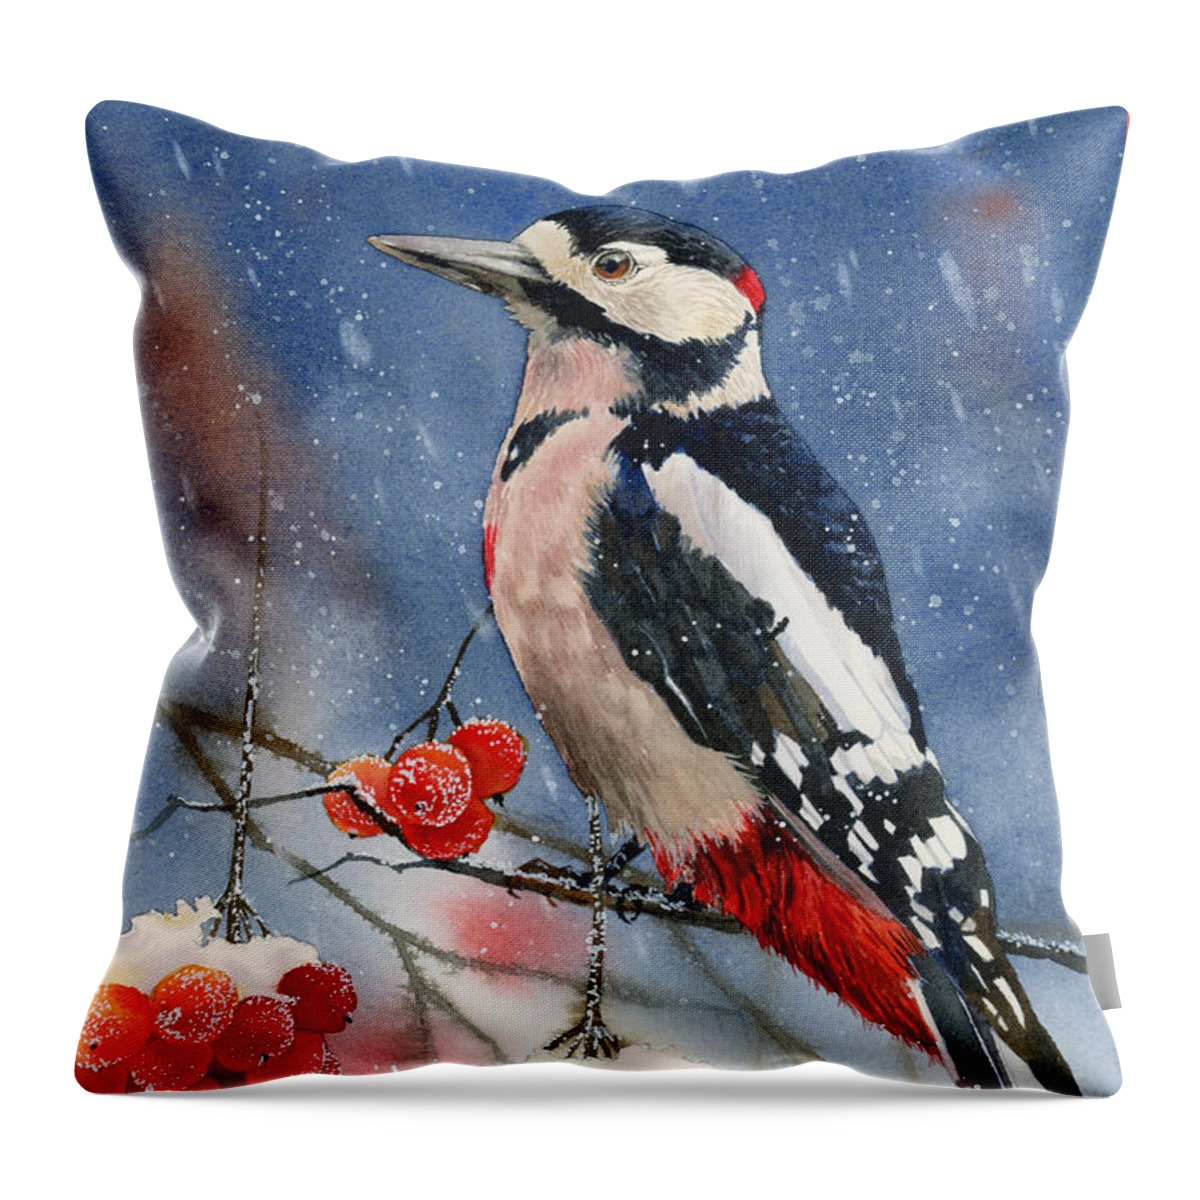 Bird Throw Pillow featuring the painting Winter Woodpecker by Espero Art